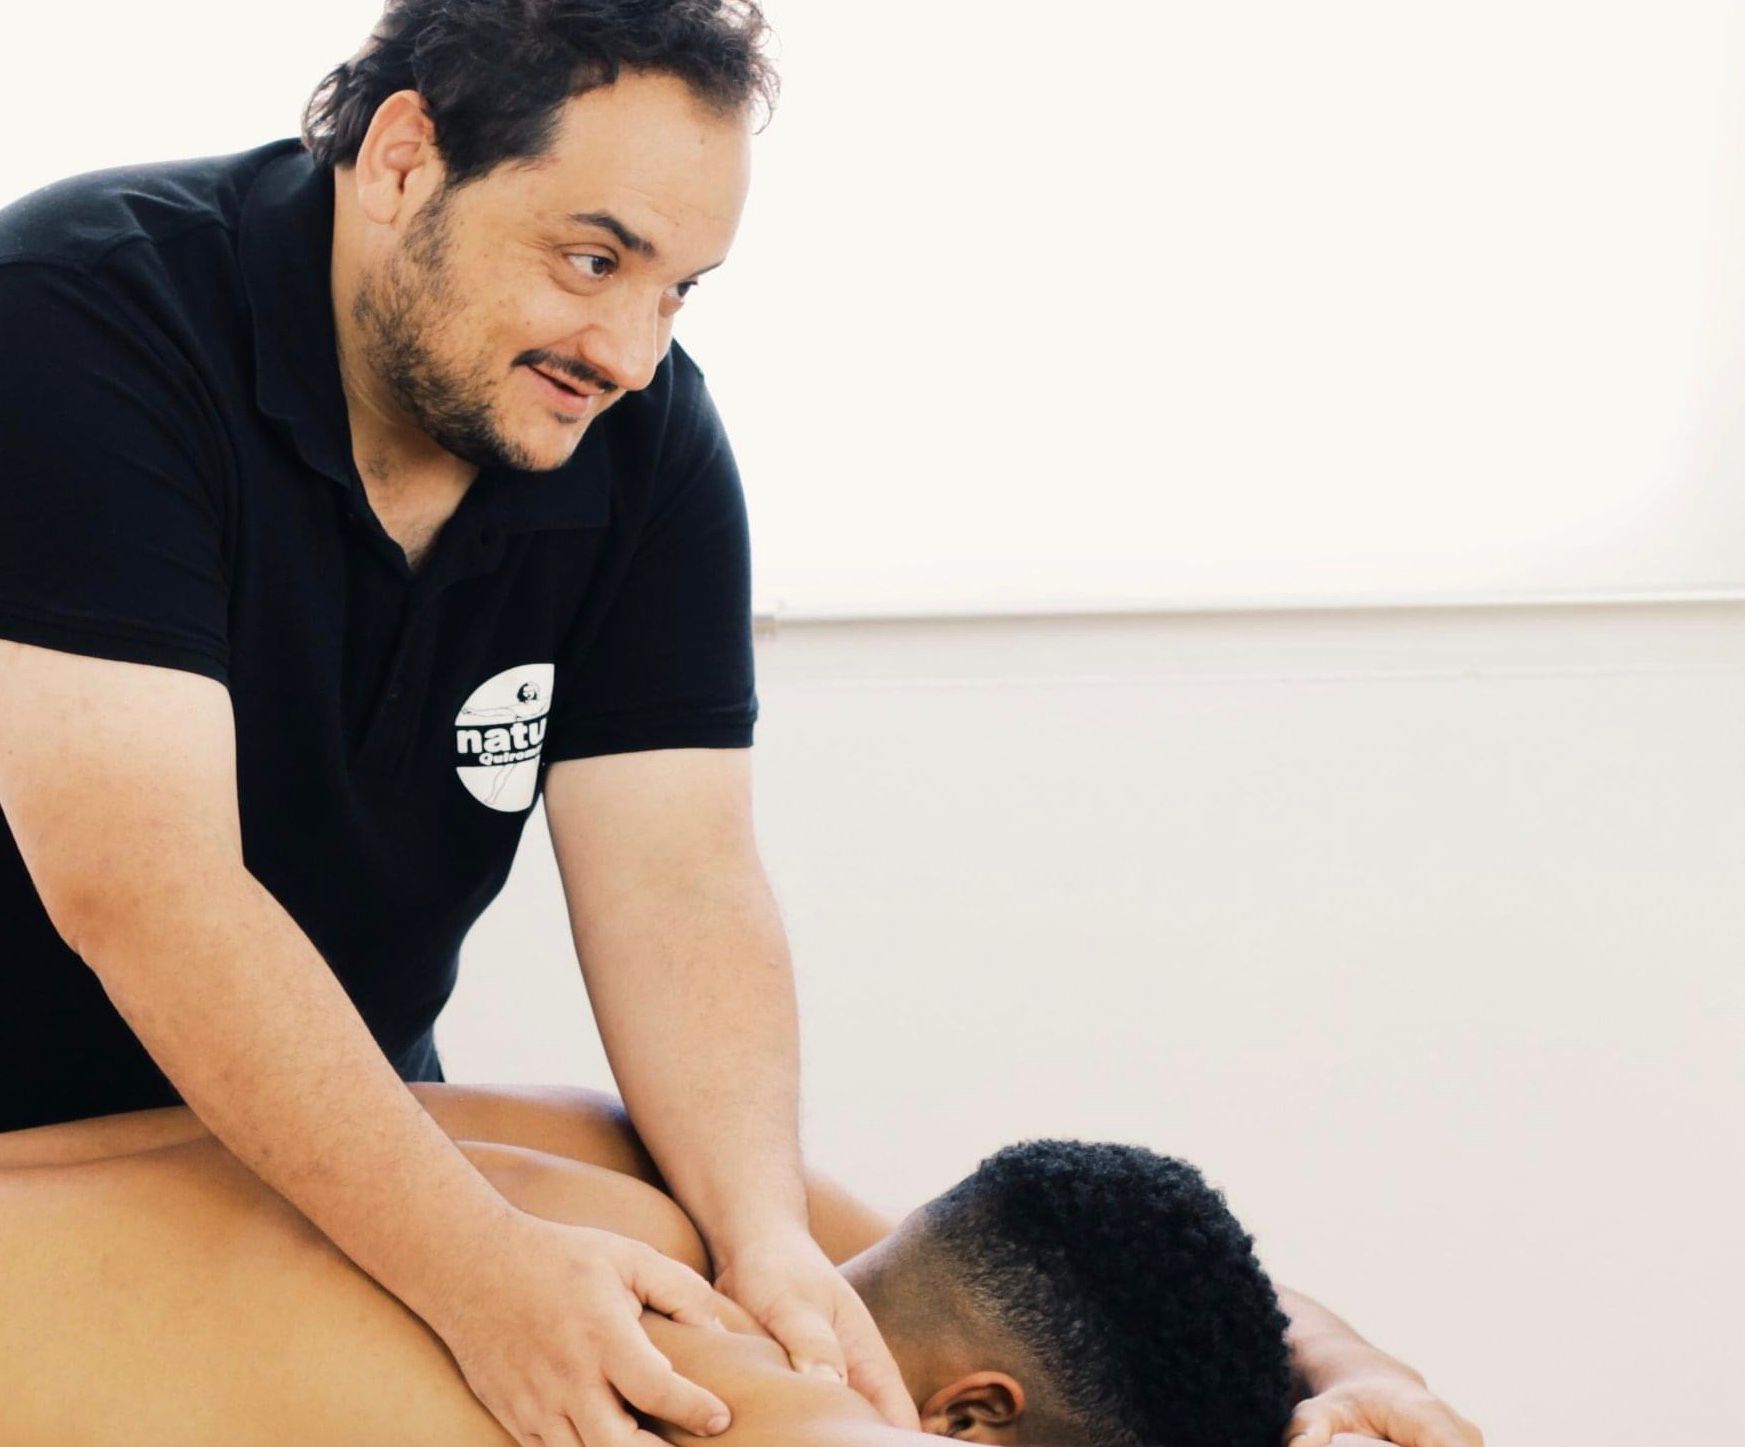 curso de masaje online palmodigital